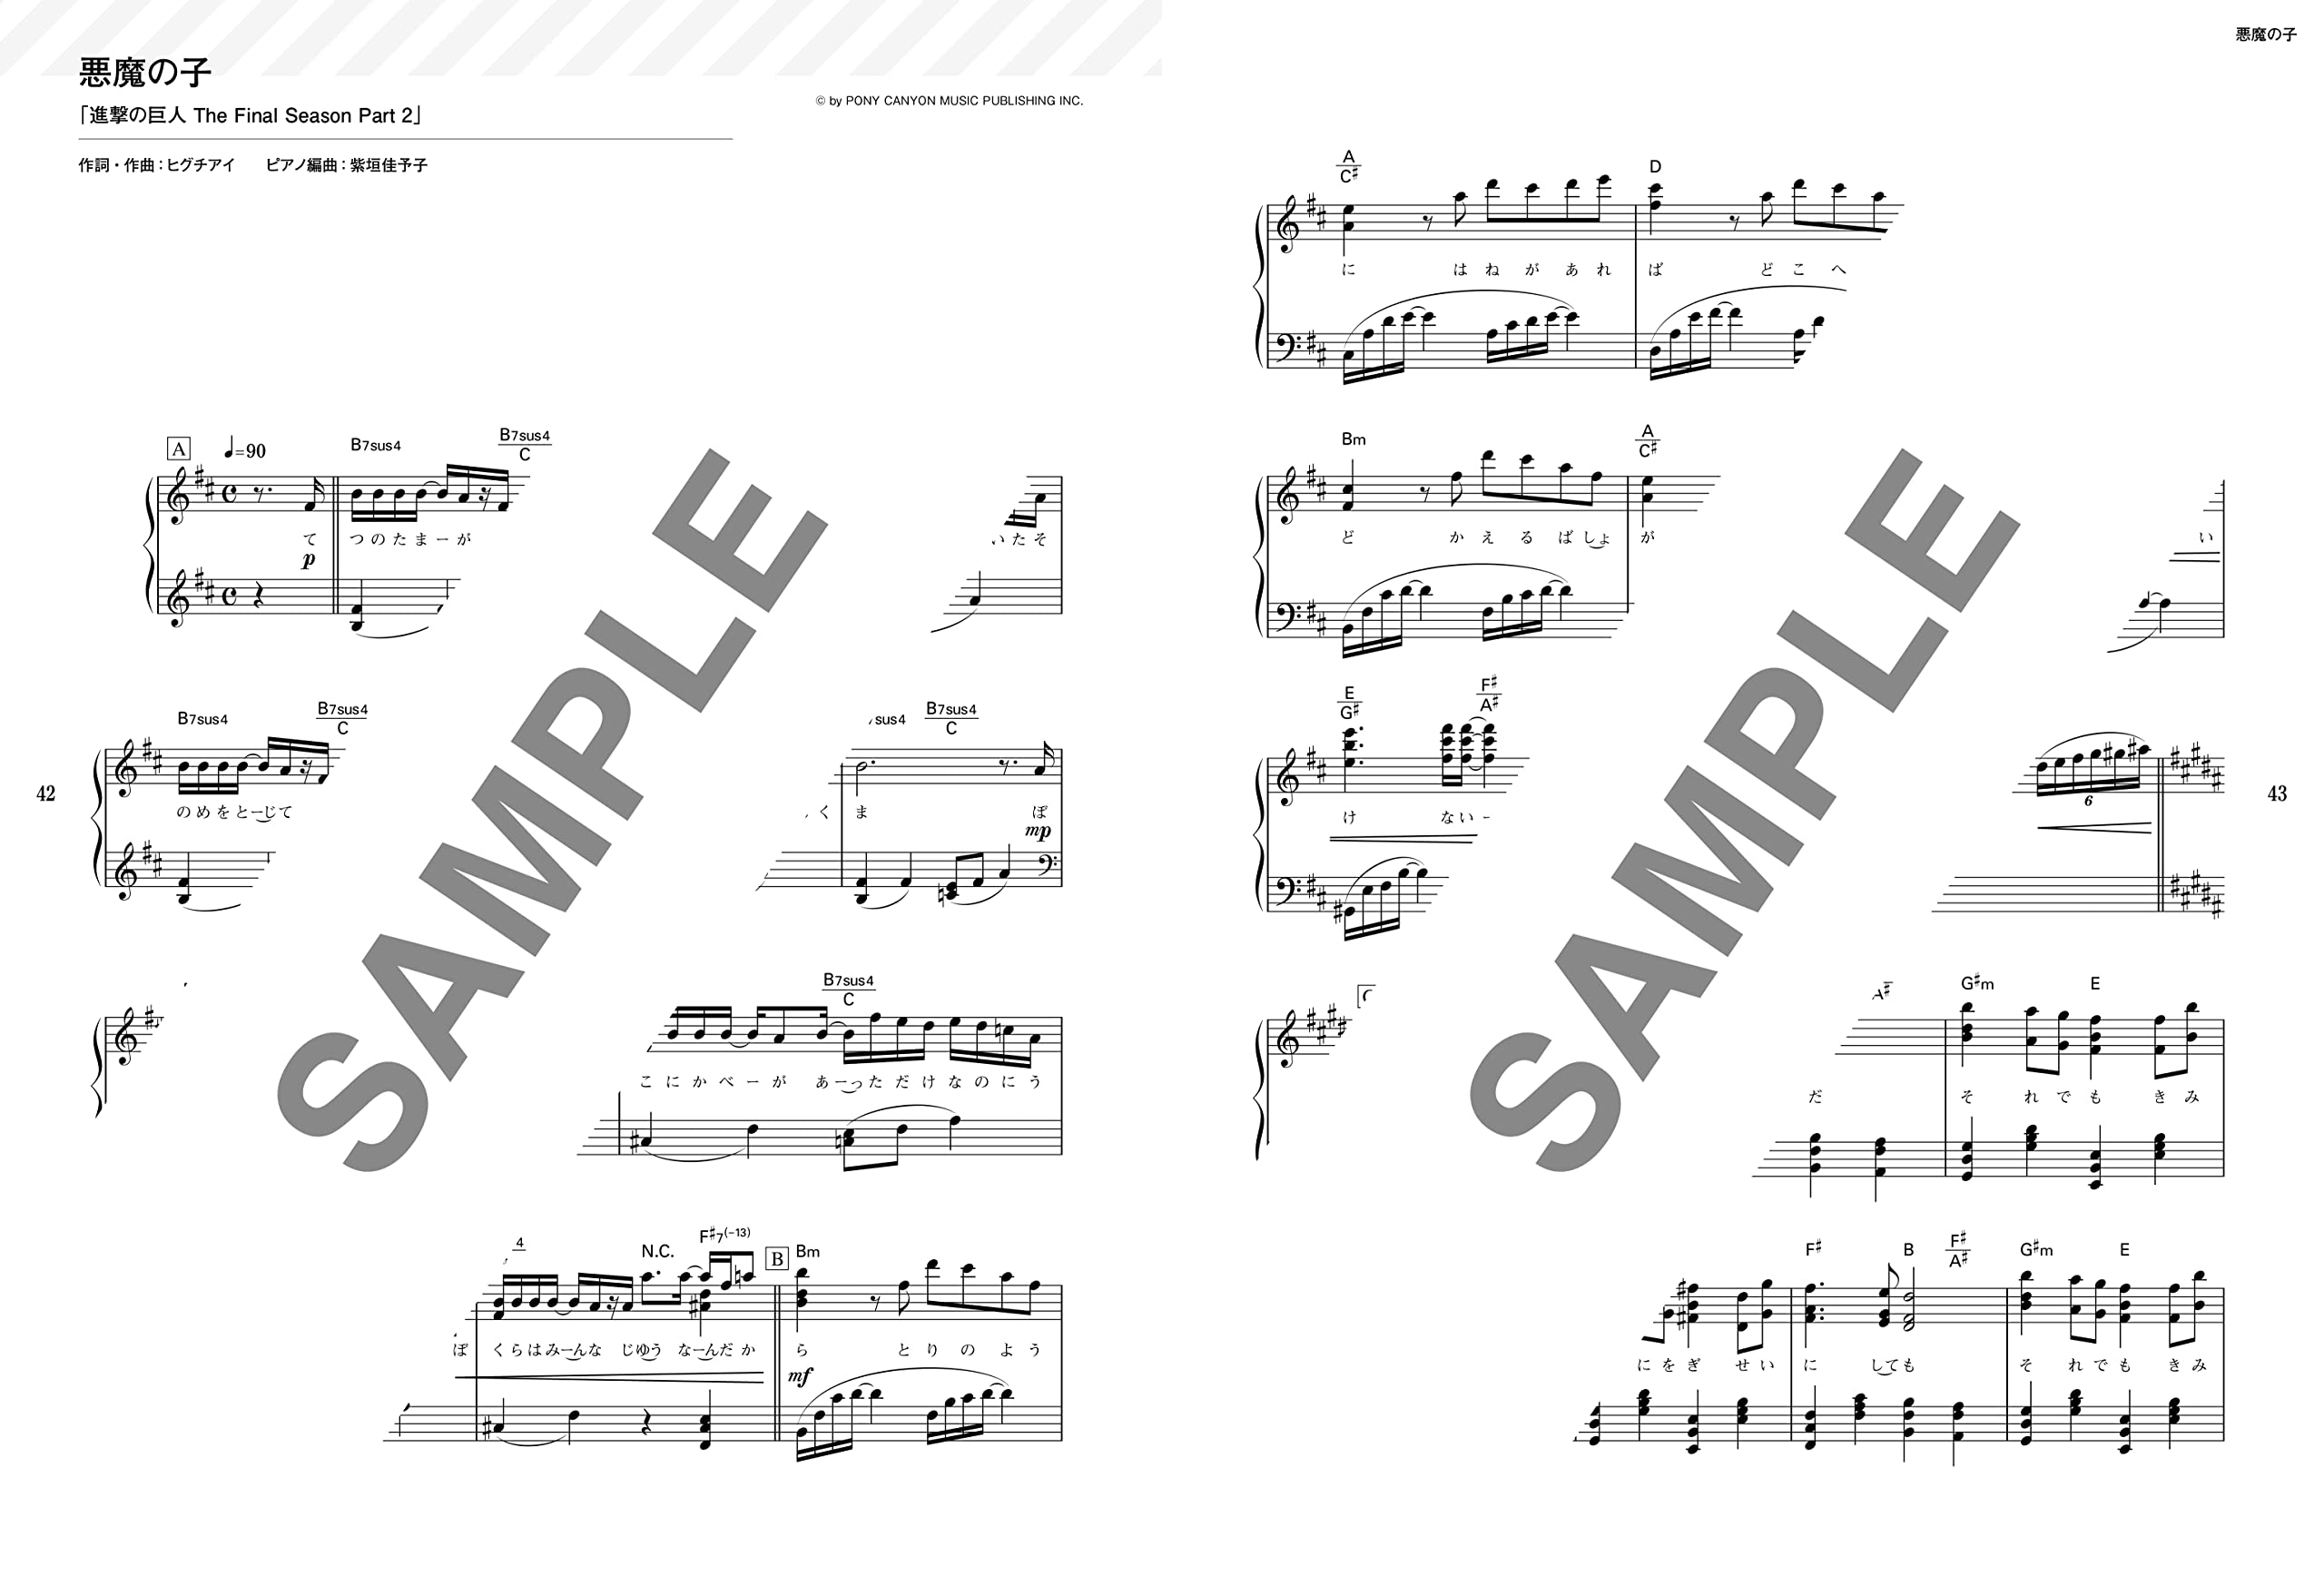 Anime Clarinet Sheet Music